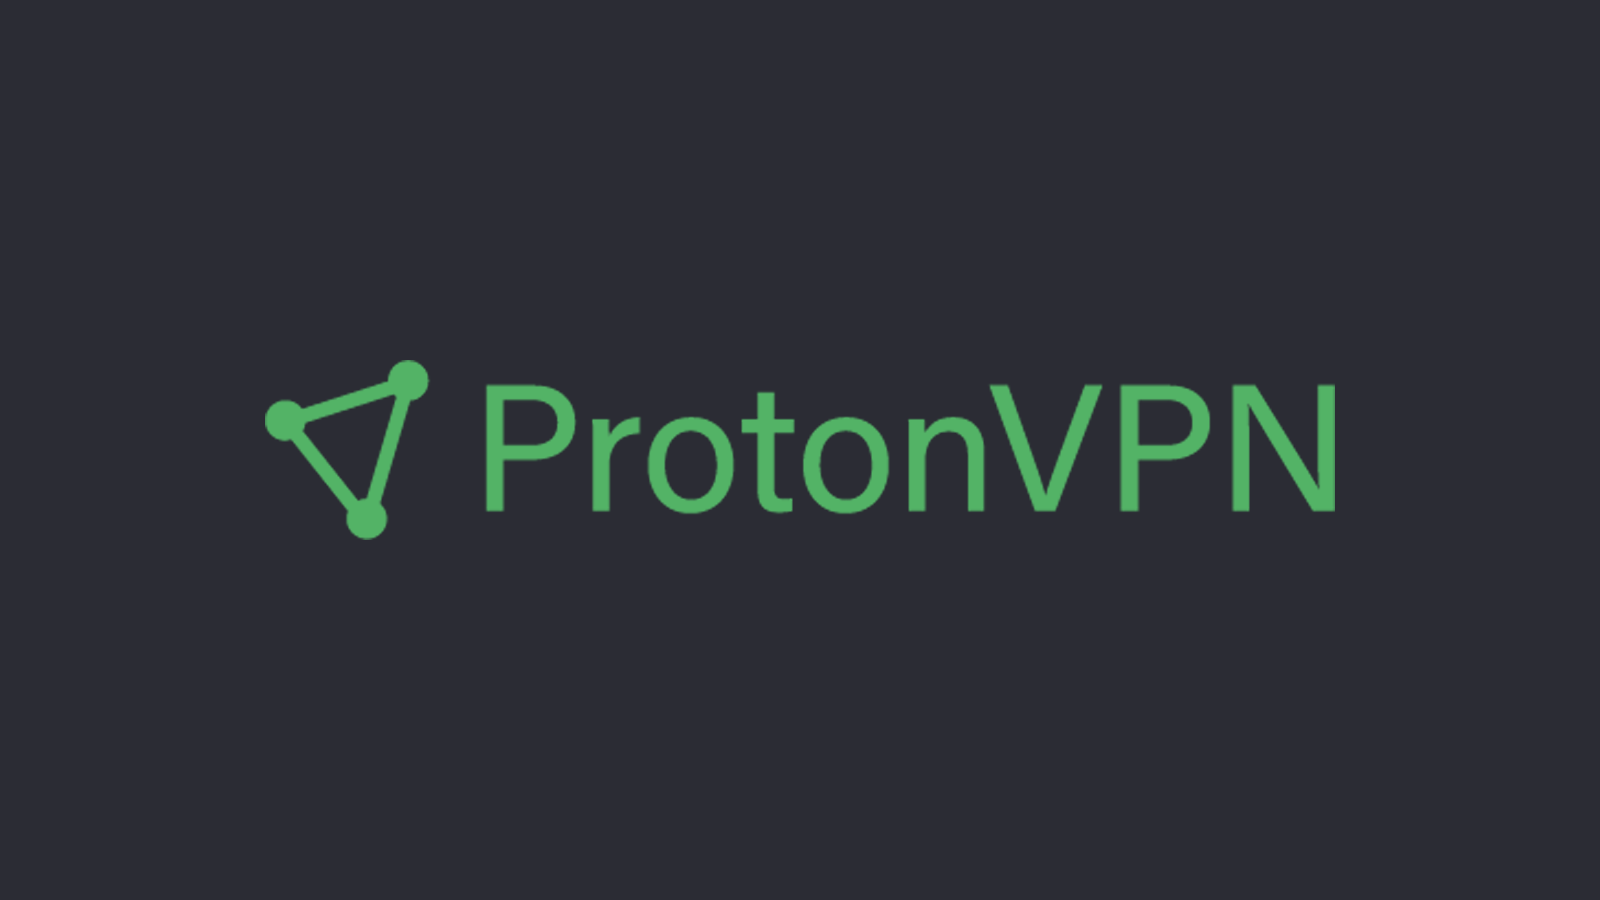 ProtonVPN logo against dark background